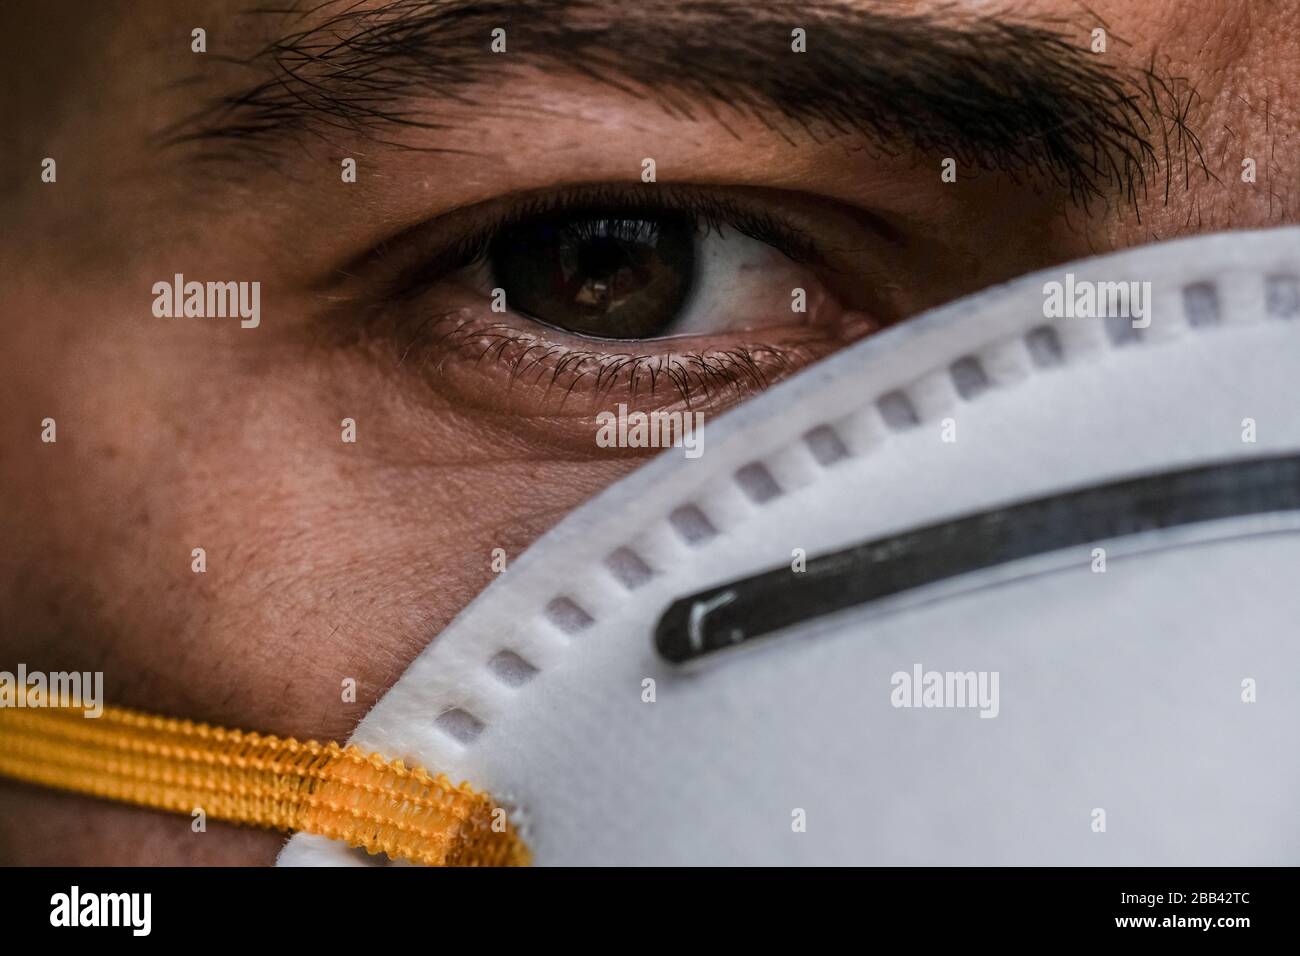 Man eye portrait details dressing corona virus covid-19 protective mask,disease Stock Photo